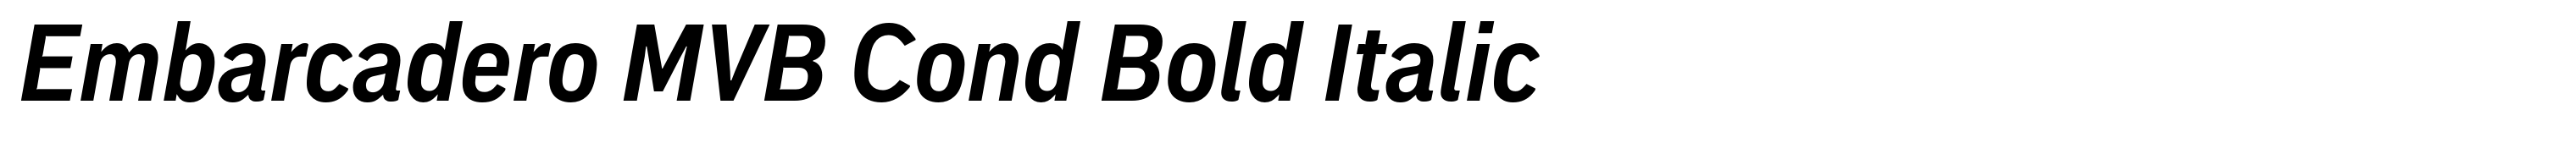 Embarcadero MVB Cond Bold Italic